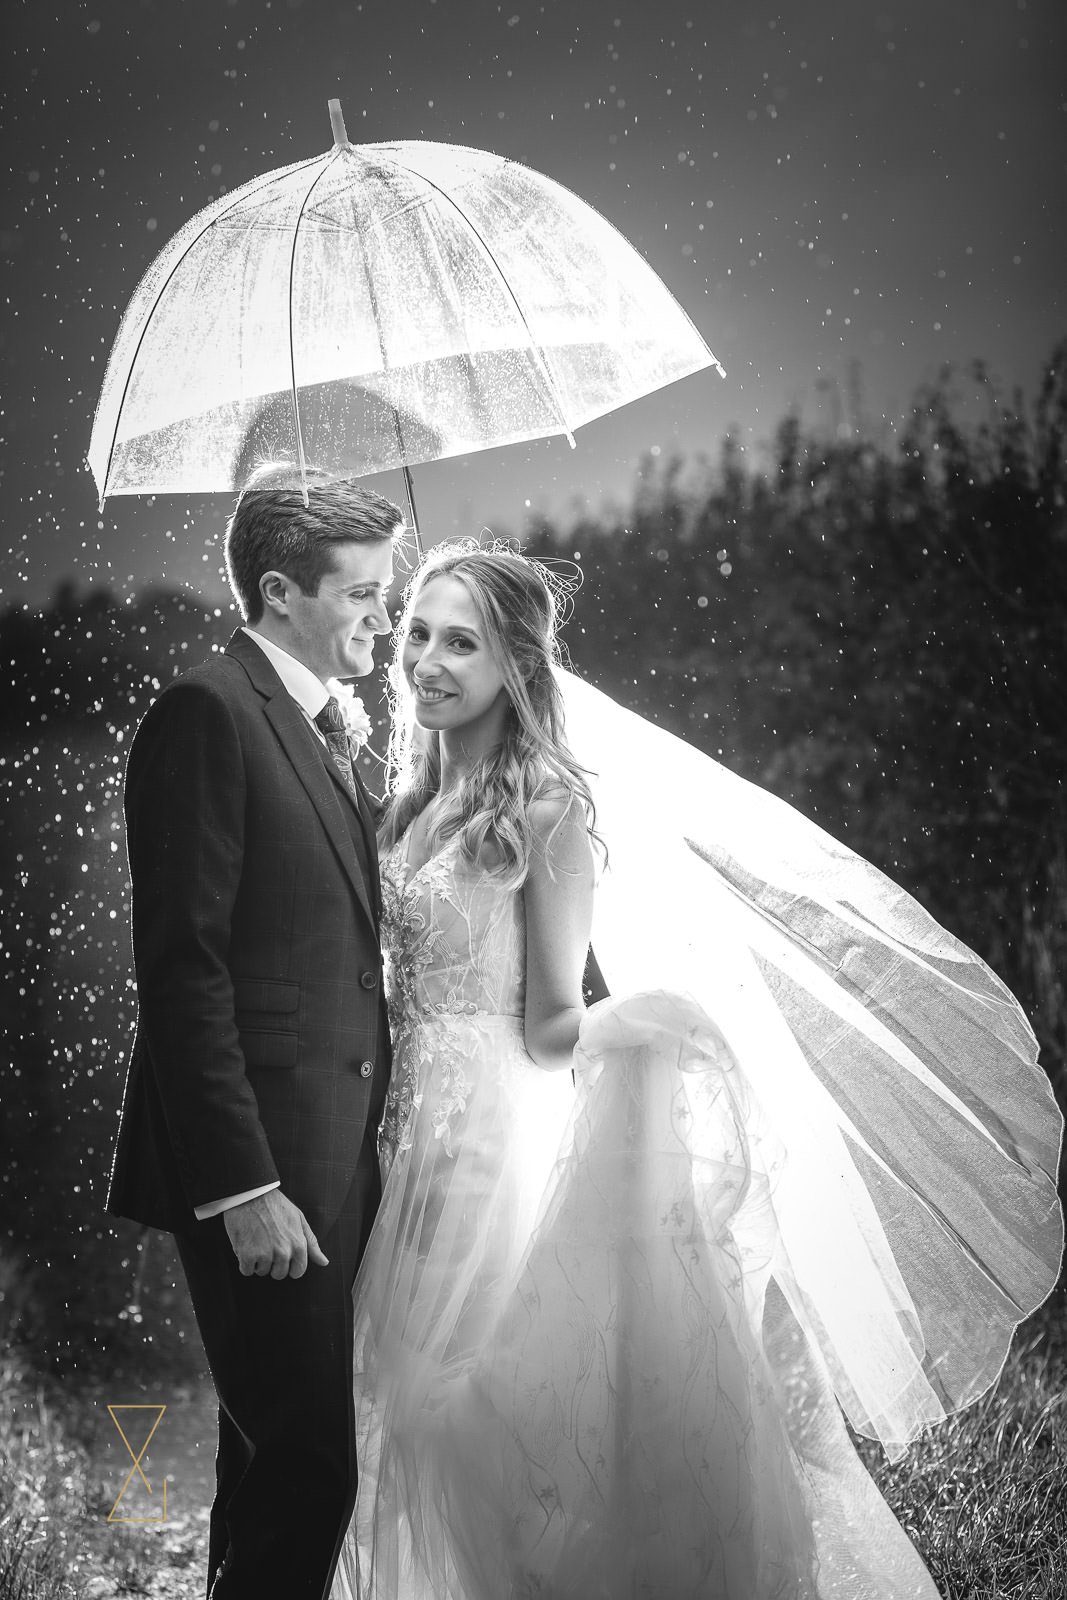 Rain-on-wedding-day-tips-08.jpg